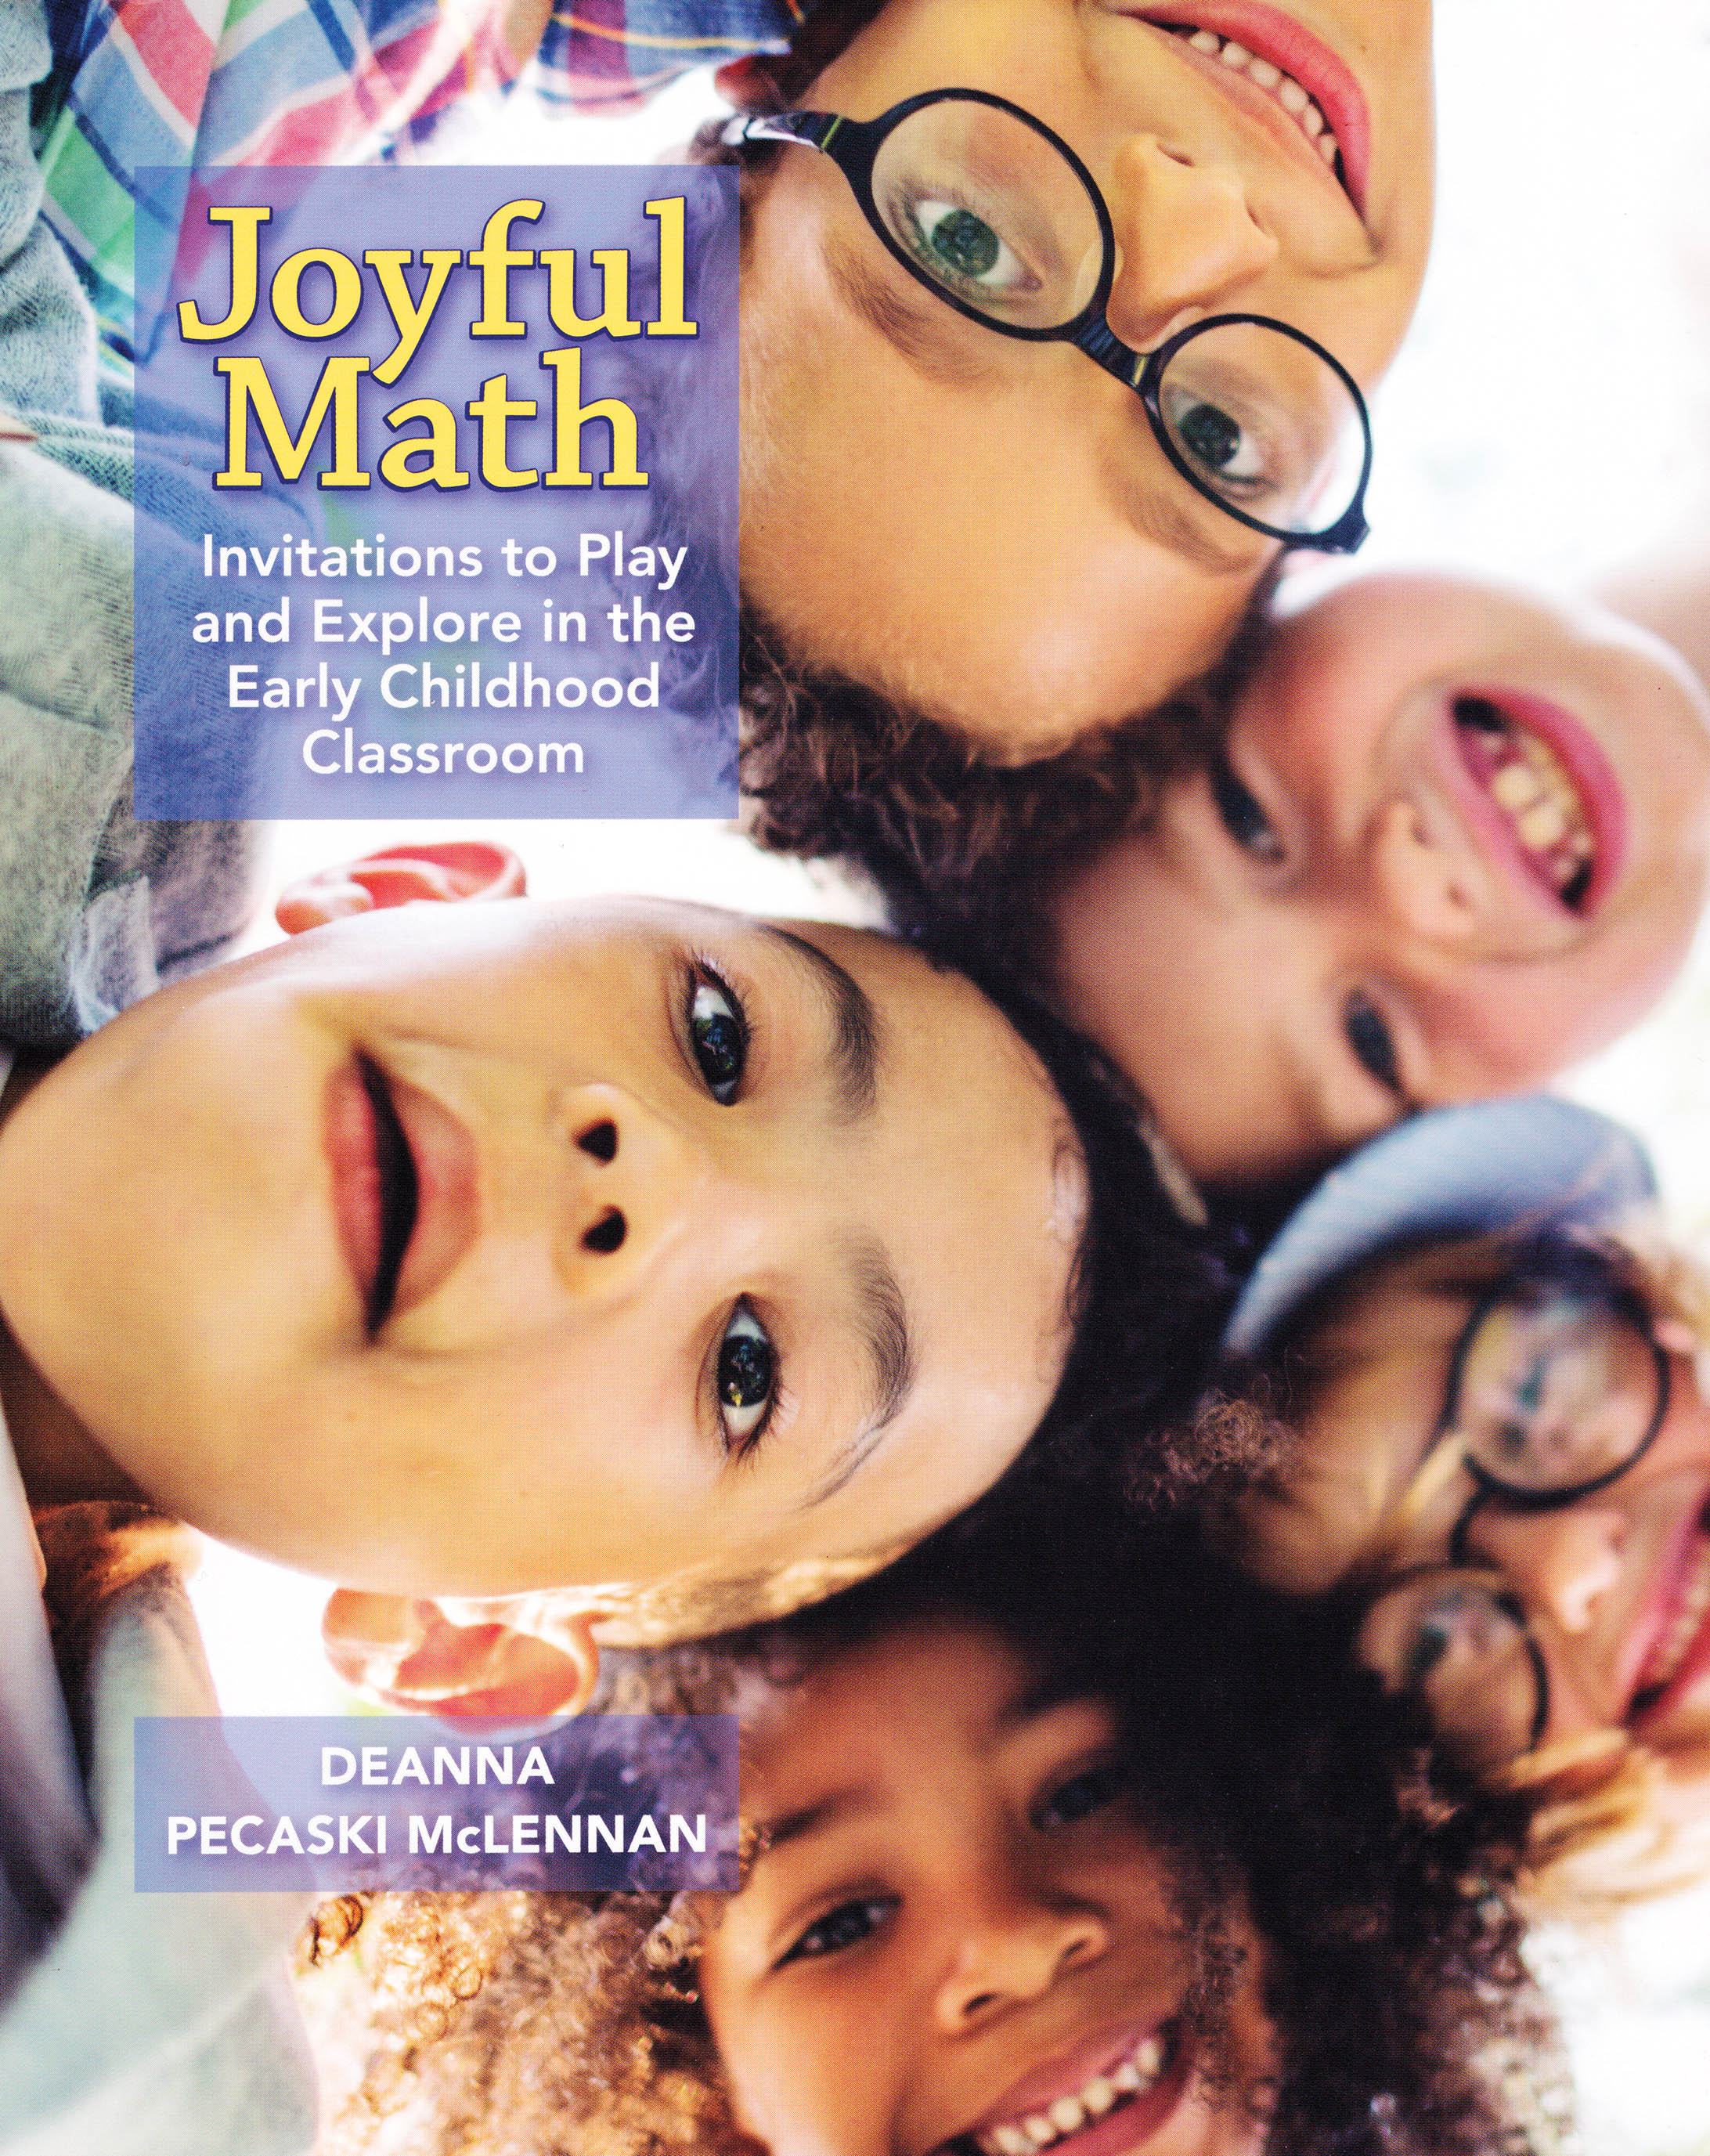 'Joyful Math' book cover.